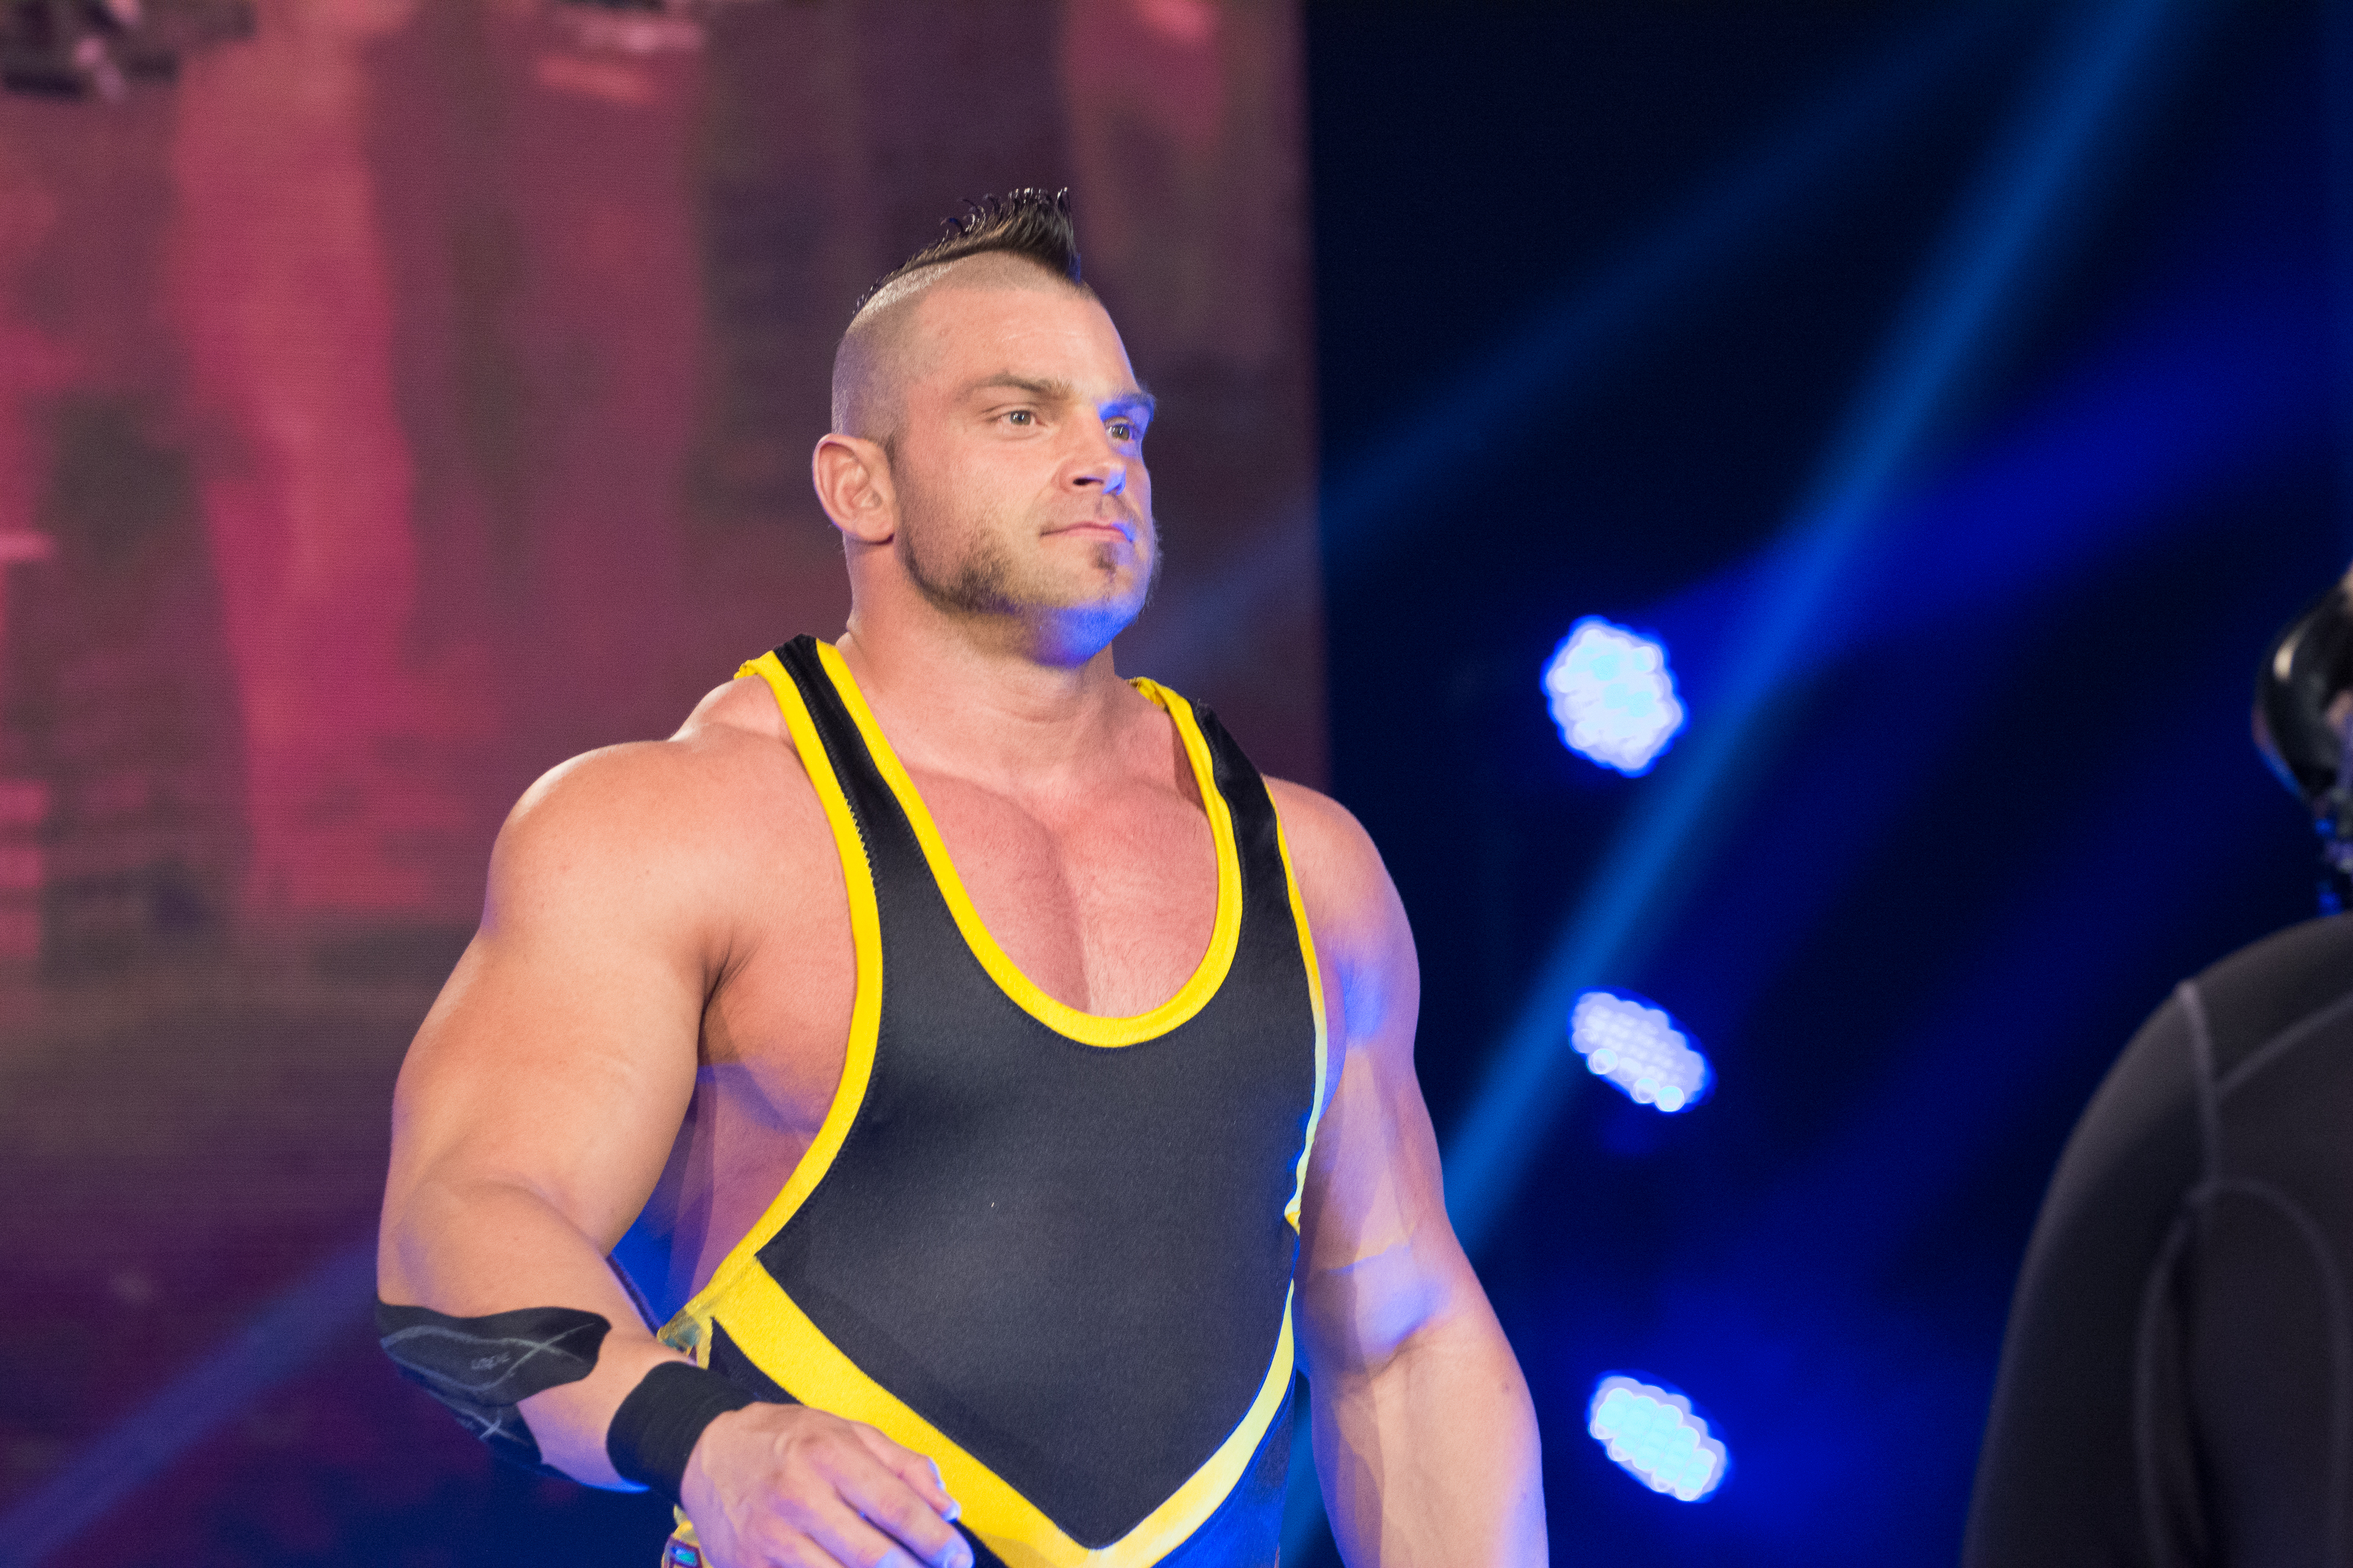 Impact Wrestling's Crossroads 2018